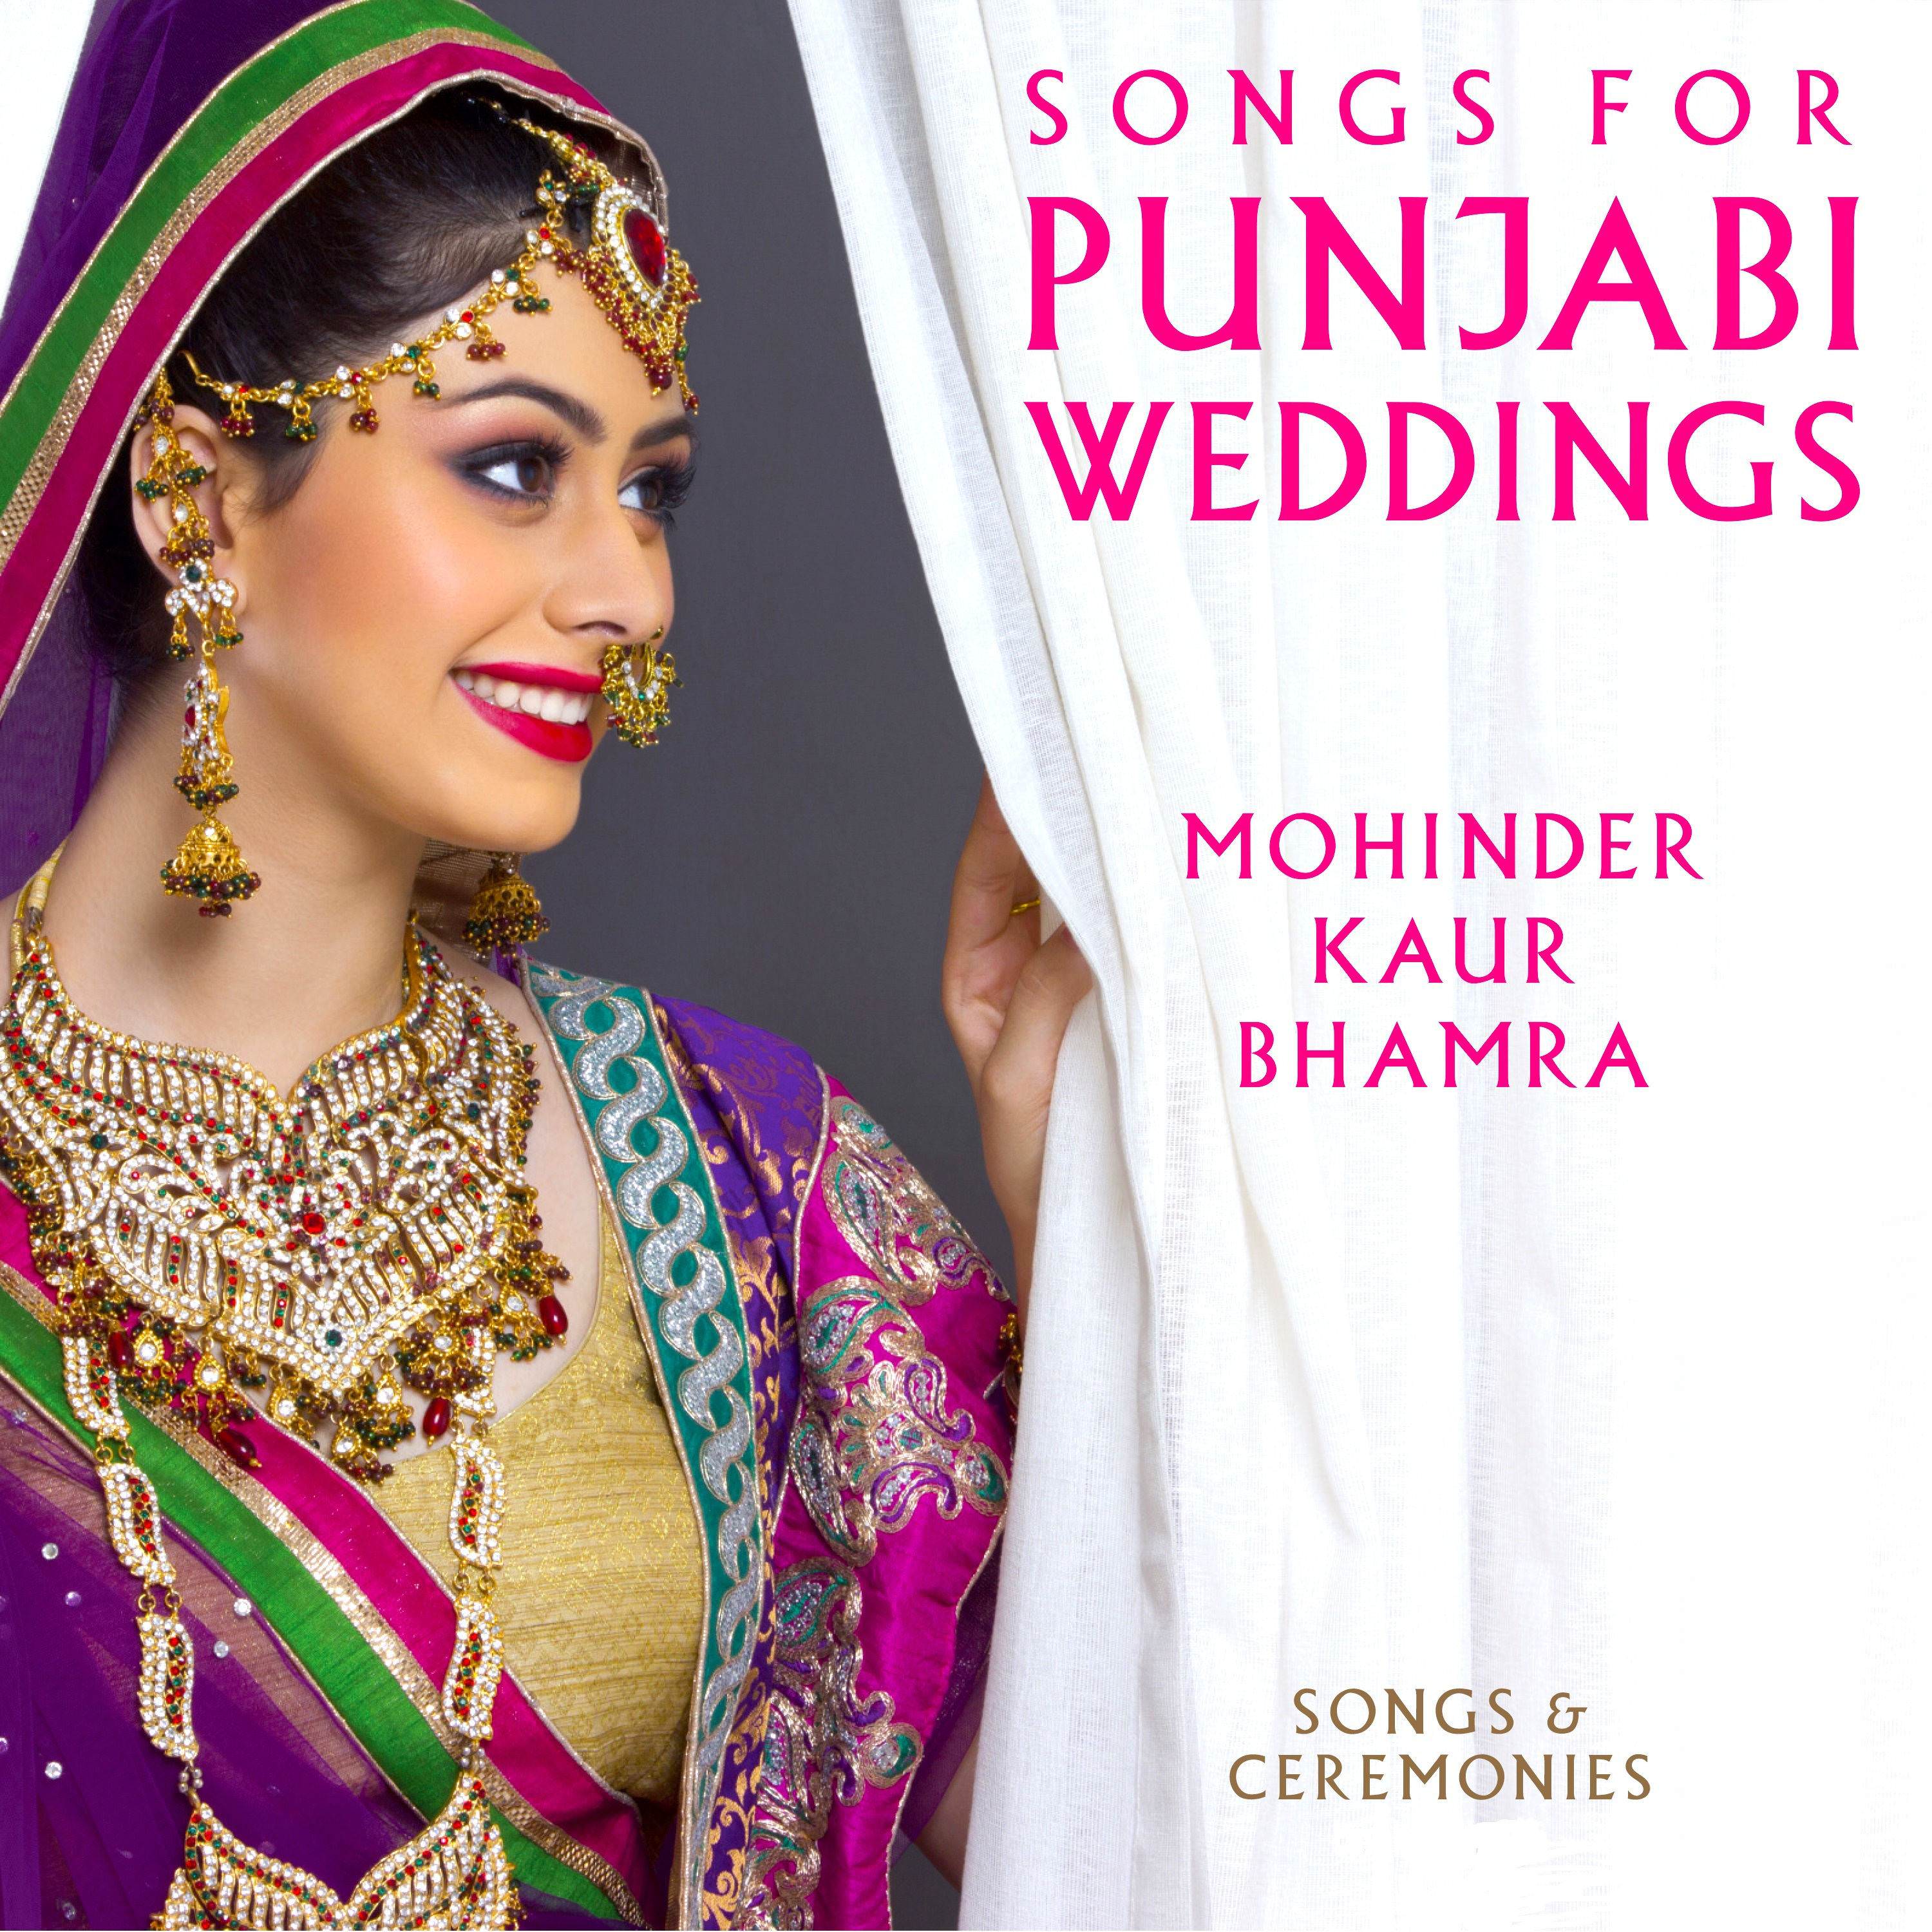 Mohinder Kaur Bhamra - Songs for Punjabi Weddings (Songs & Ceremonies) (2018) [FLAC 24bit/44,1kHz]